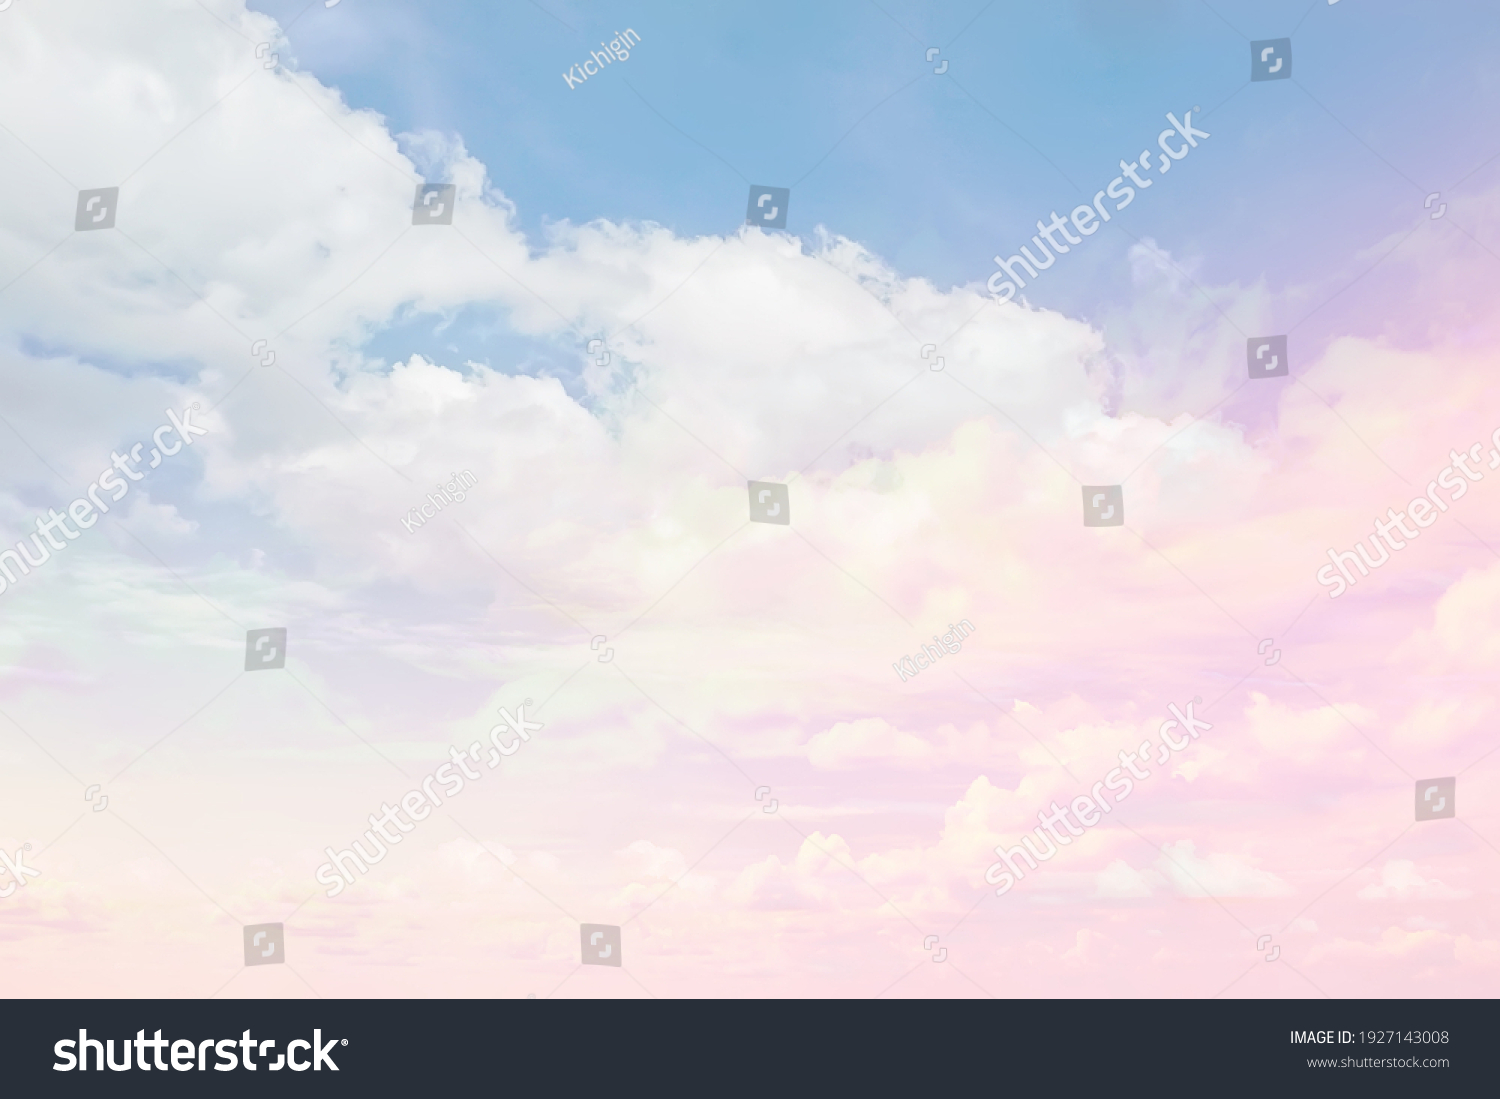 964,643 Fantasy skies Images, Stock Photos & Vectors | Shutterstock